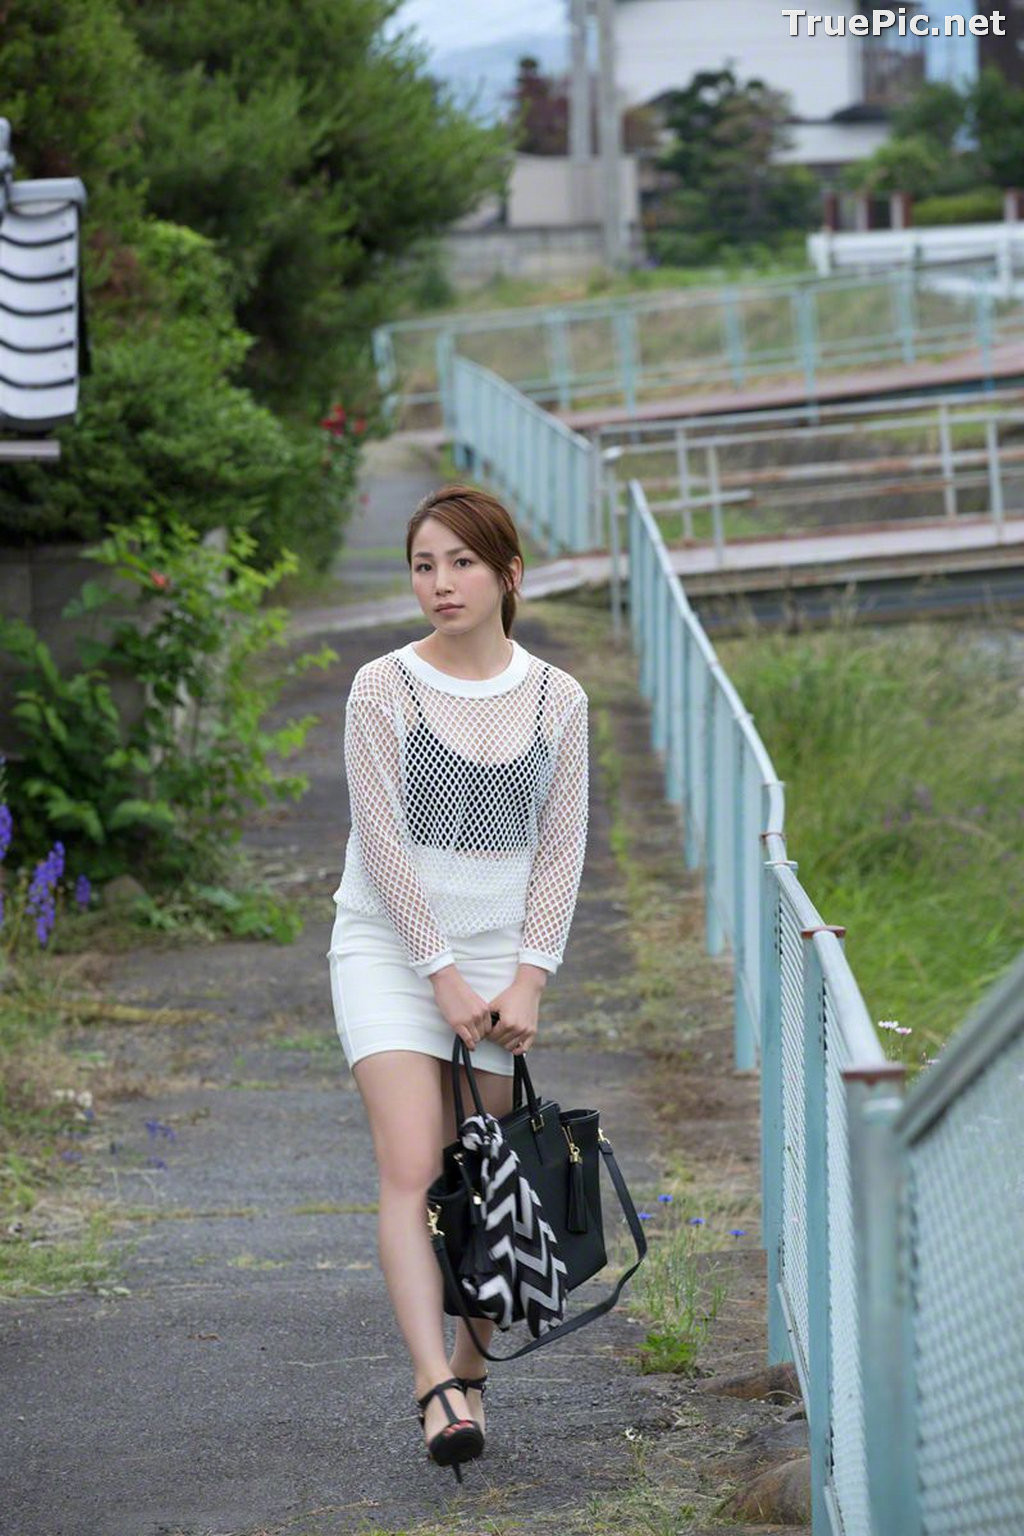 Image [Wanibooks Jacket] No.129 - Japanese Singer and Actress - You Kikkawa - TruePic.net - Picture-36